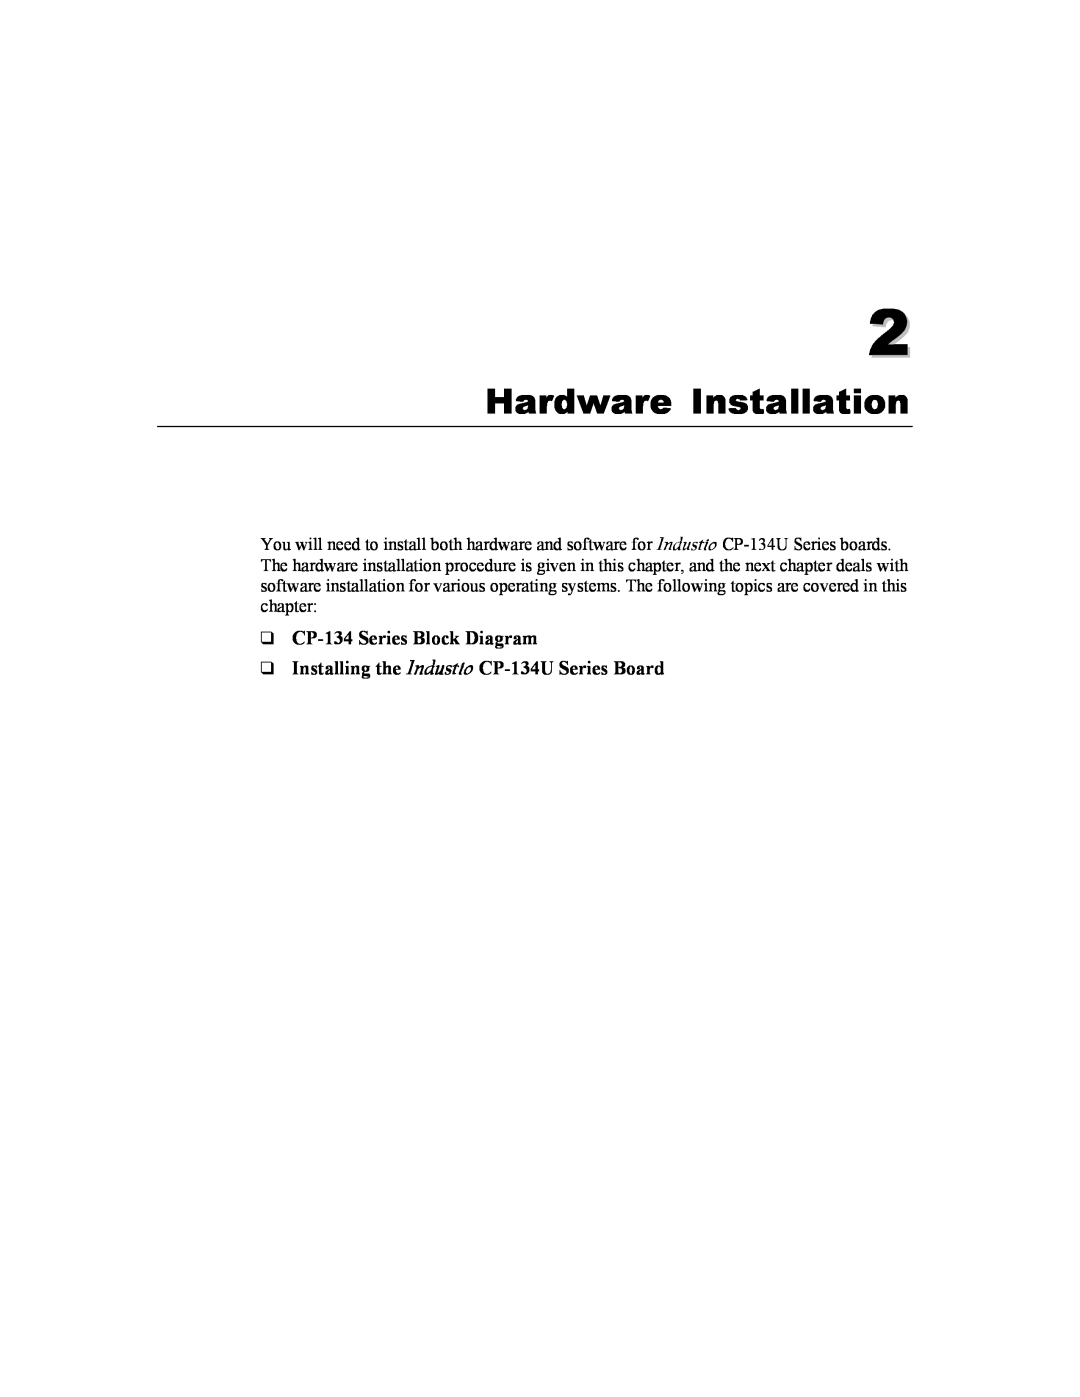 Moxa Technologies Hardware Installation, CP-134 Series Block Diagram, Installing the Industio CP-134U Series Board 